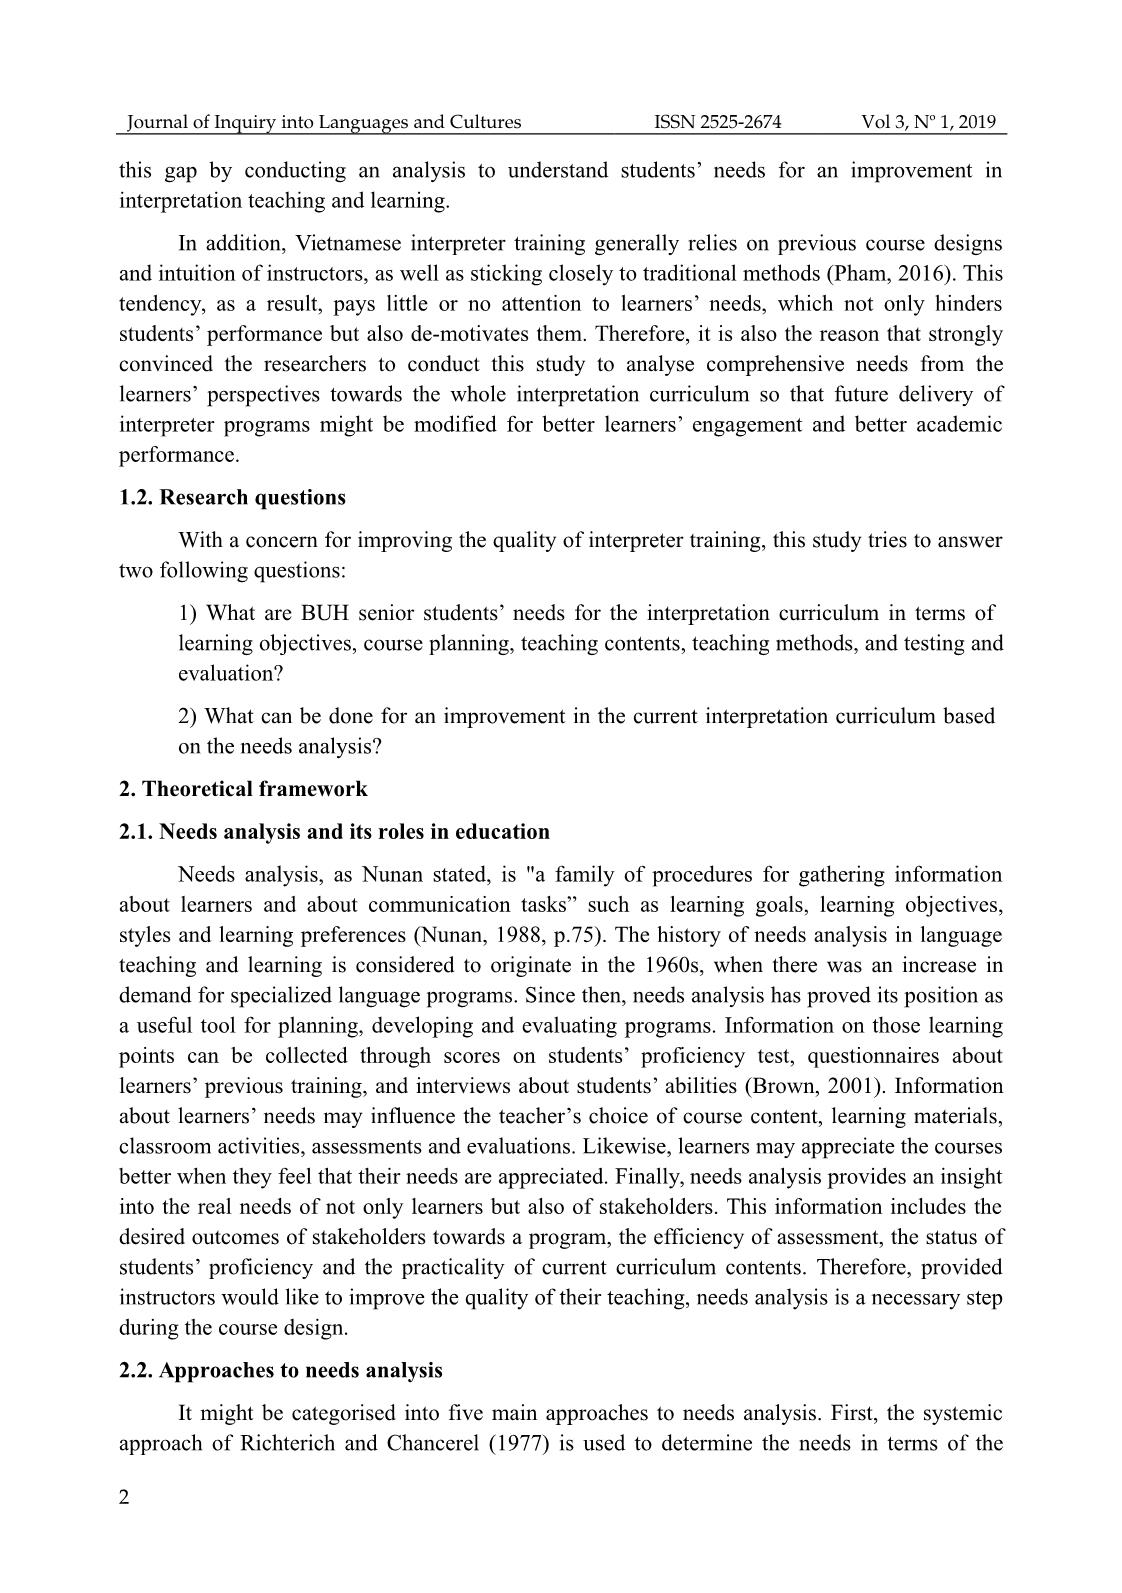 Analyzing undergraduates’ needs for an improvement in interpreter training curriculum at banking university HCMC, Vietnam trang 2